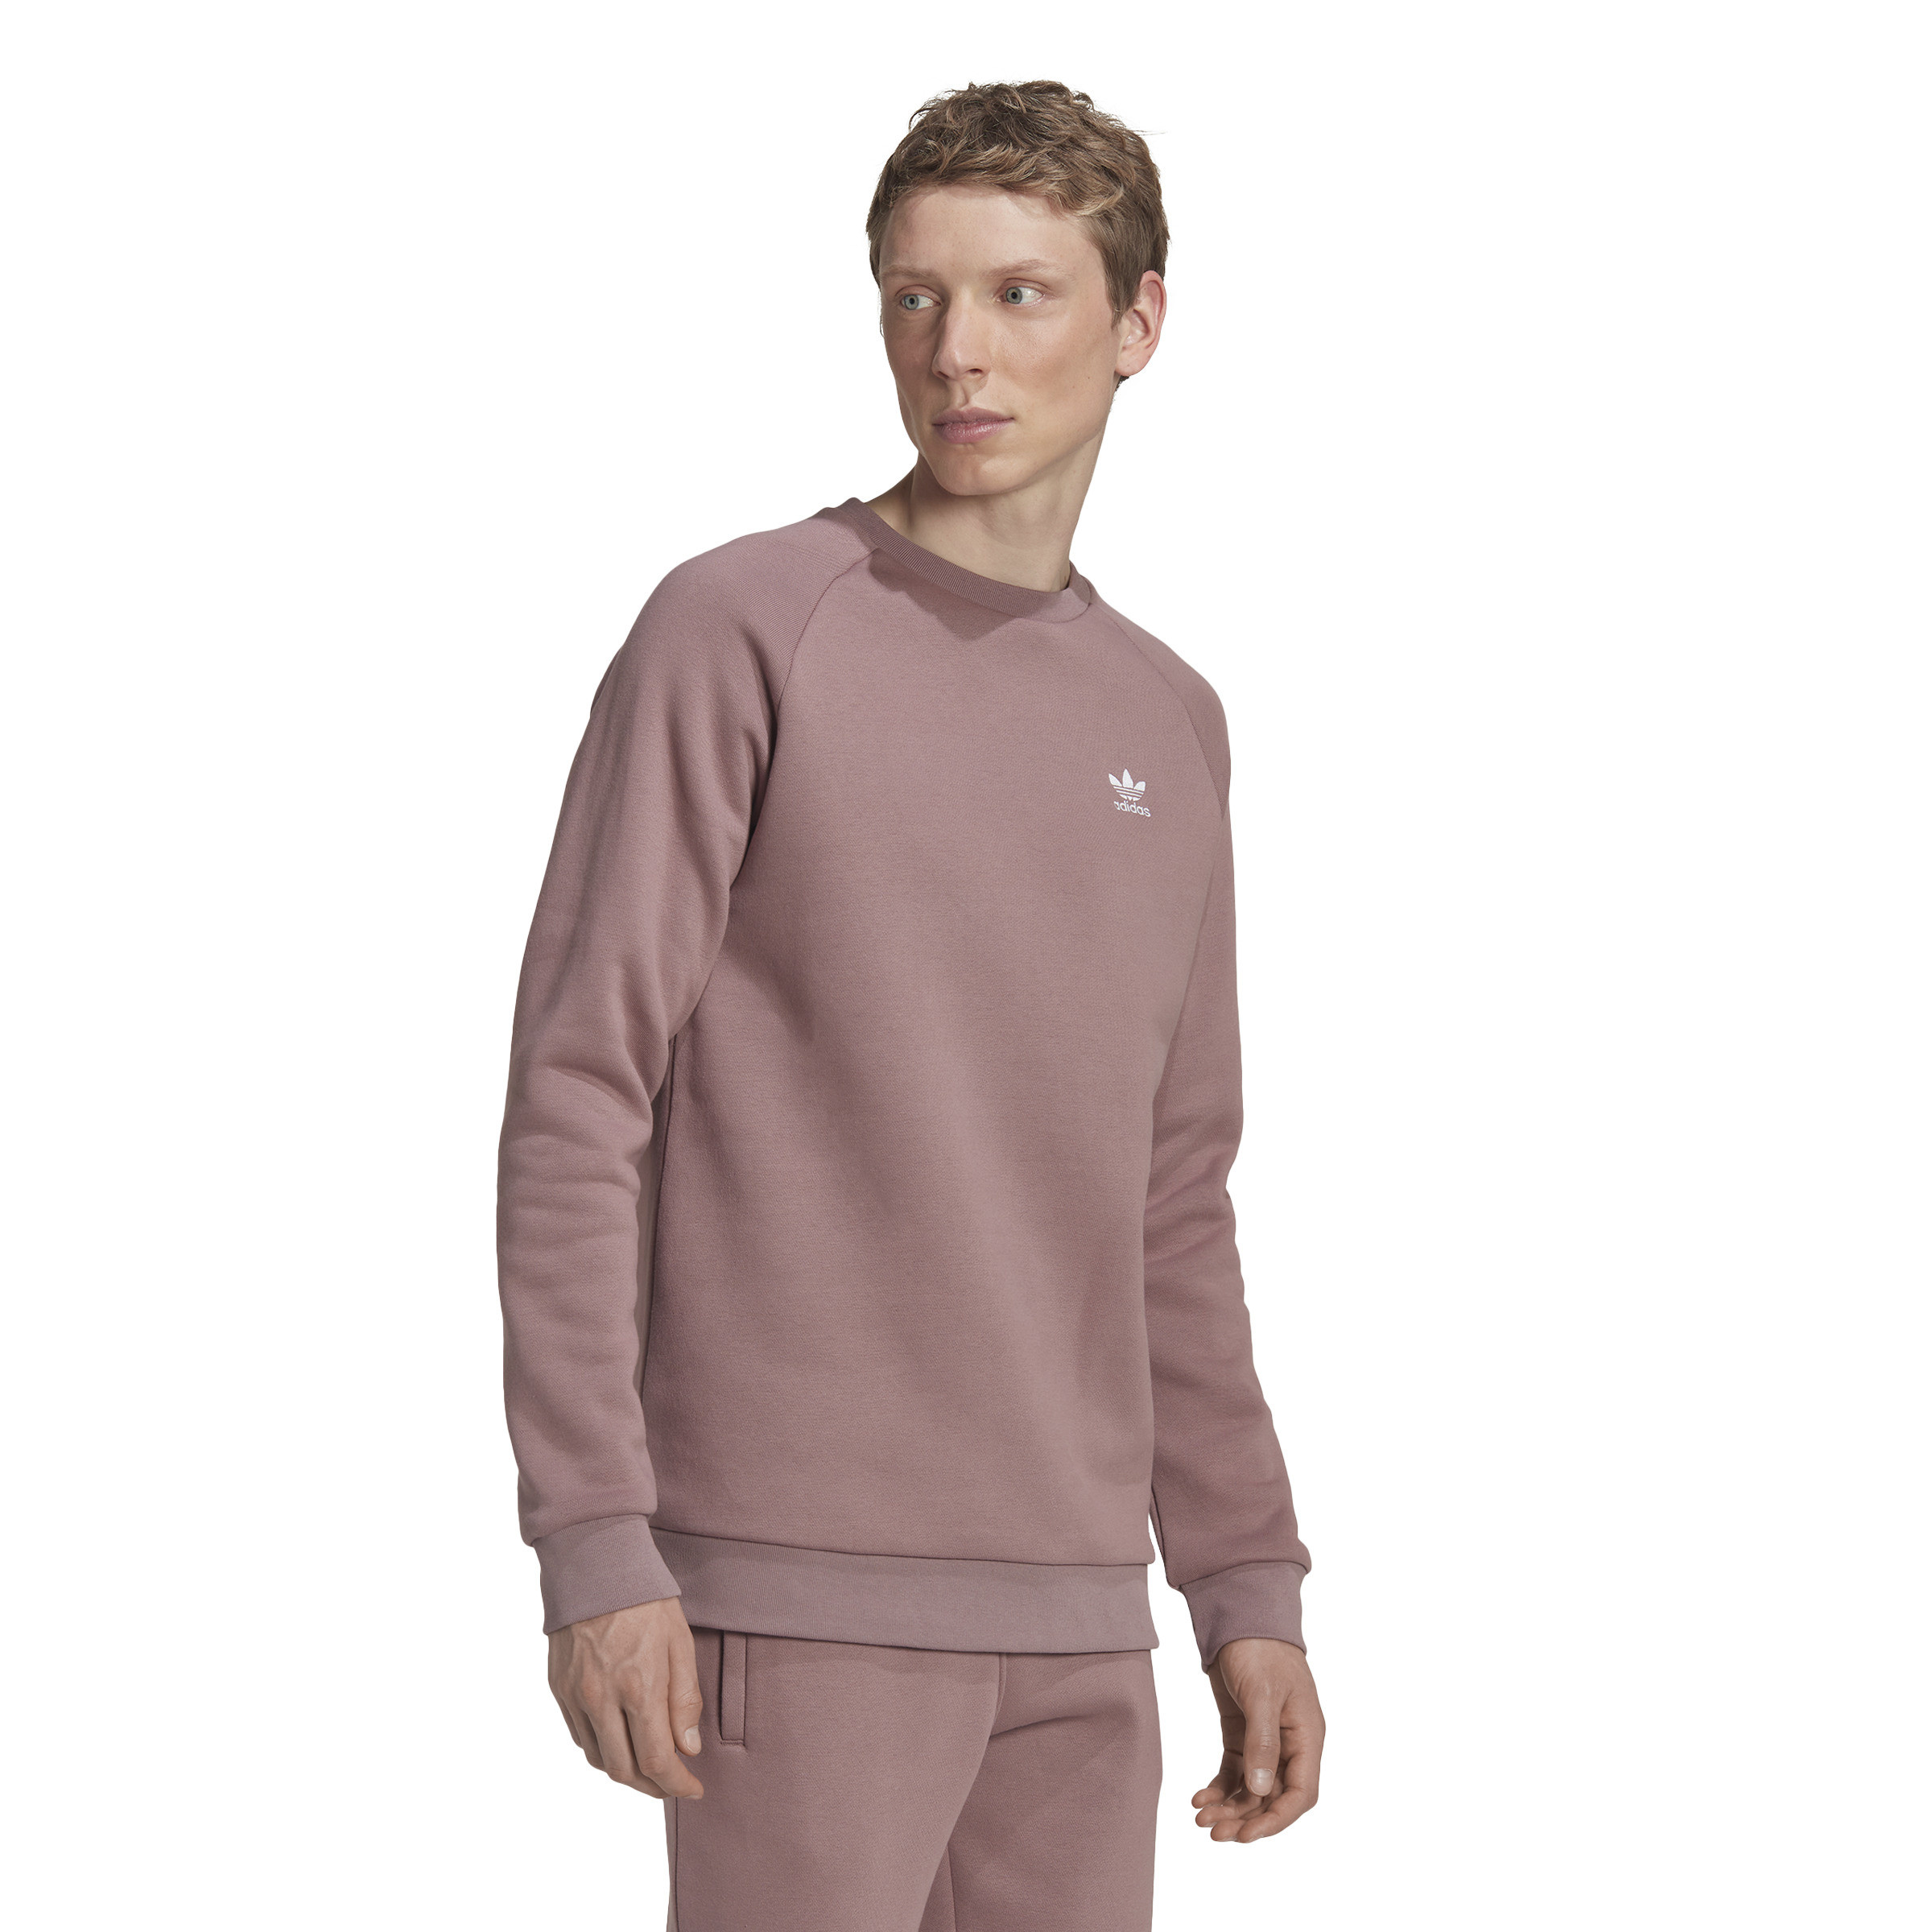 Adidas - Adicolor essentials trefoil crewneck sweatshirt, Antique Pink, large image number 2